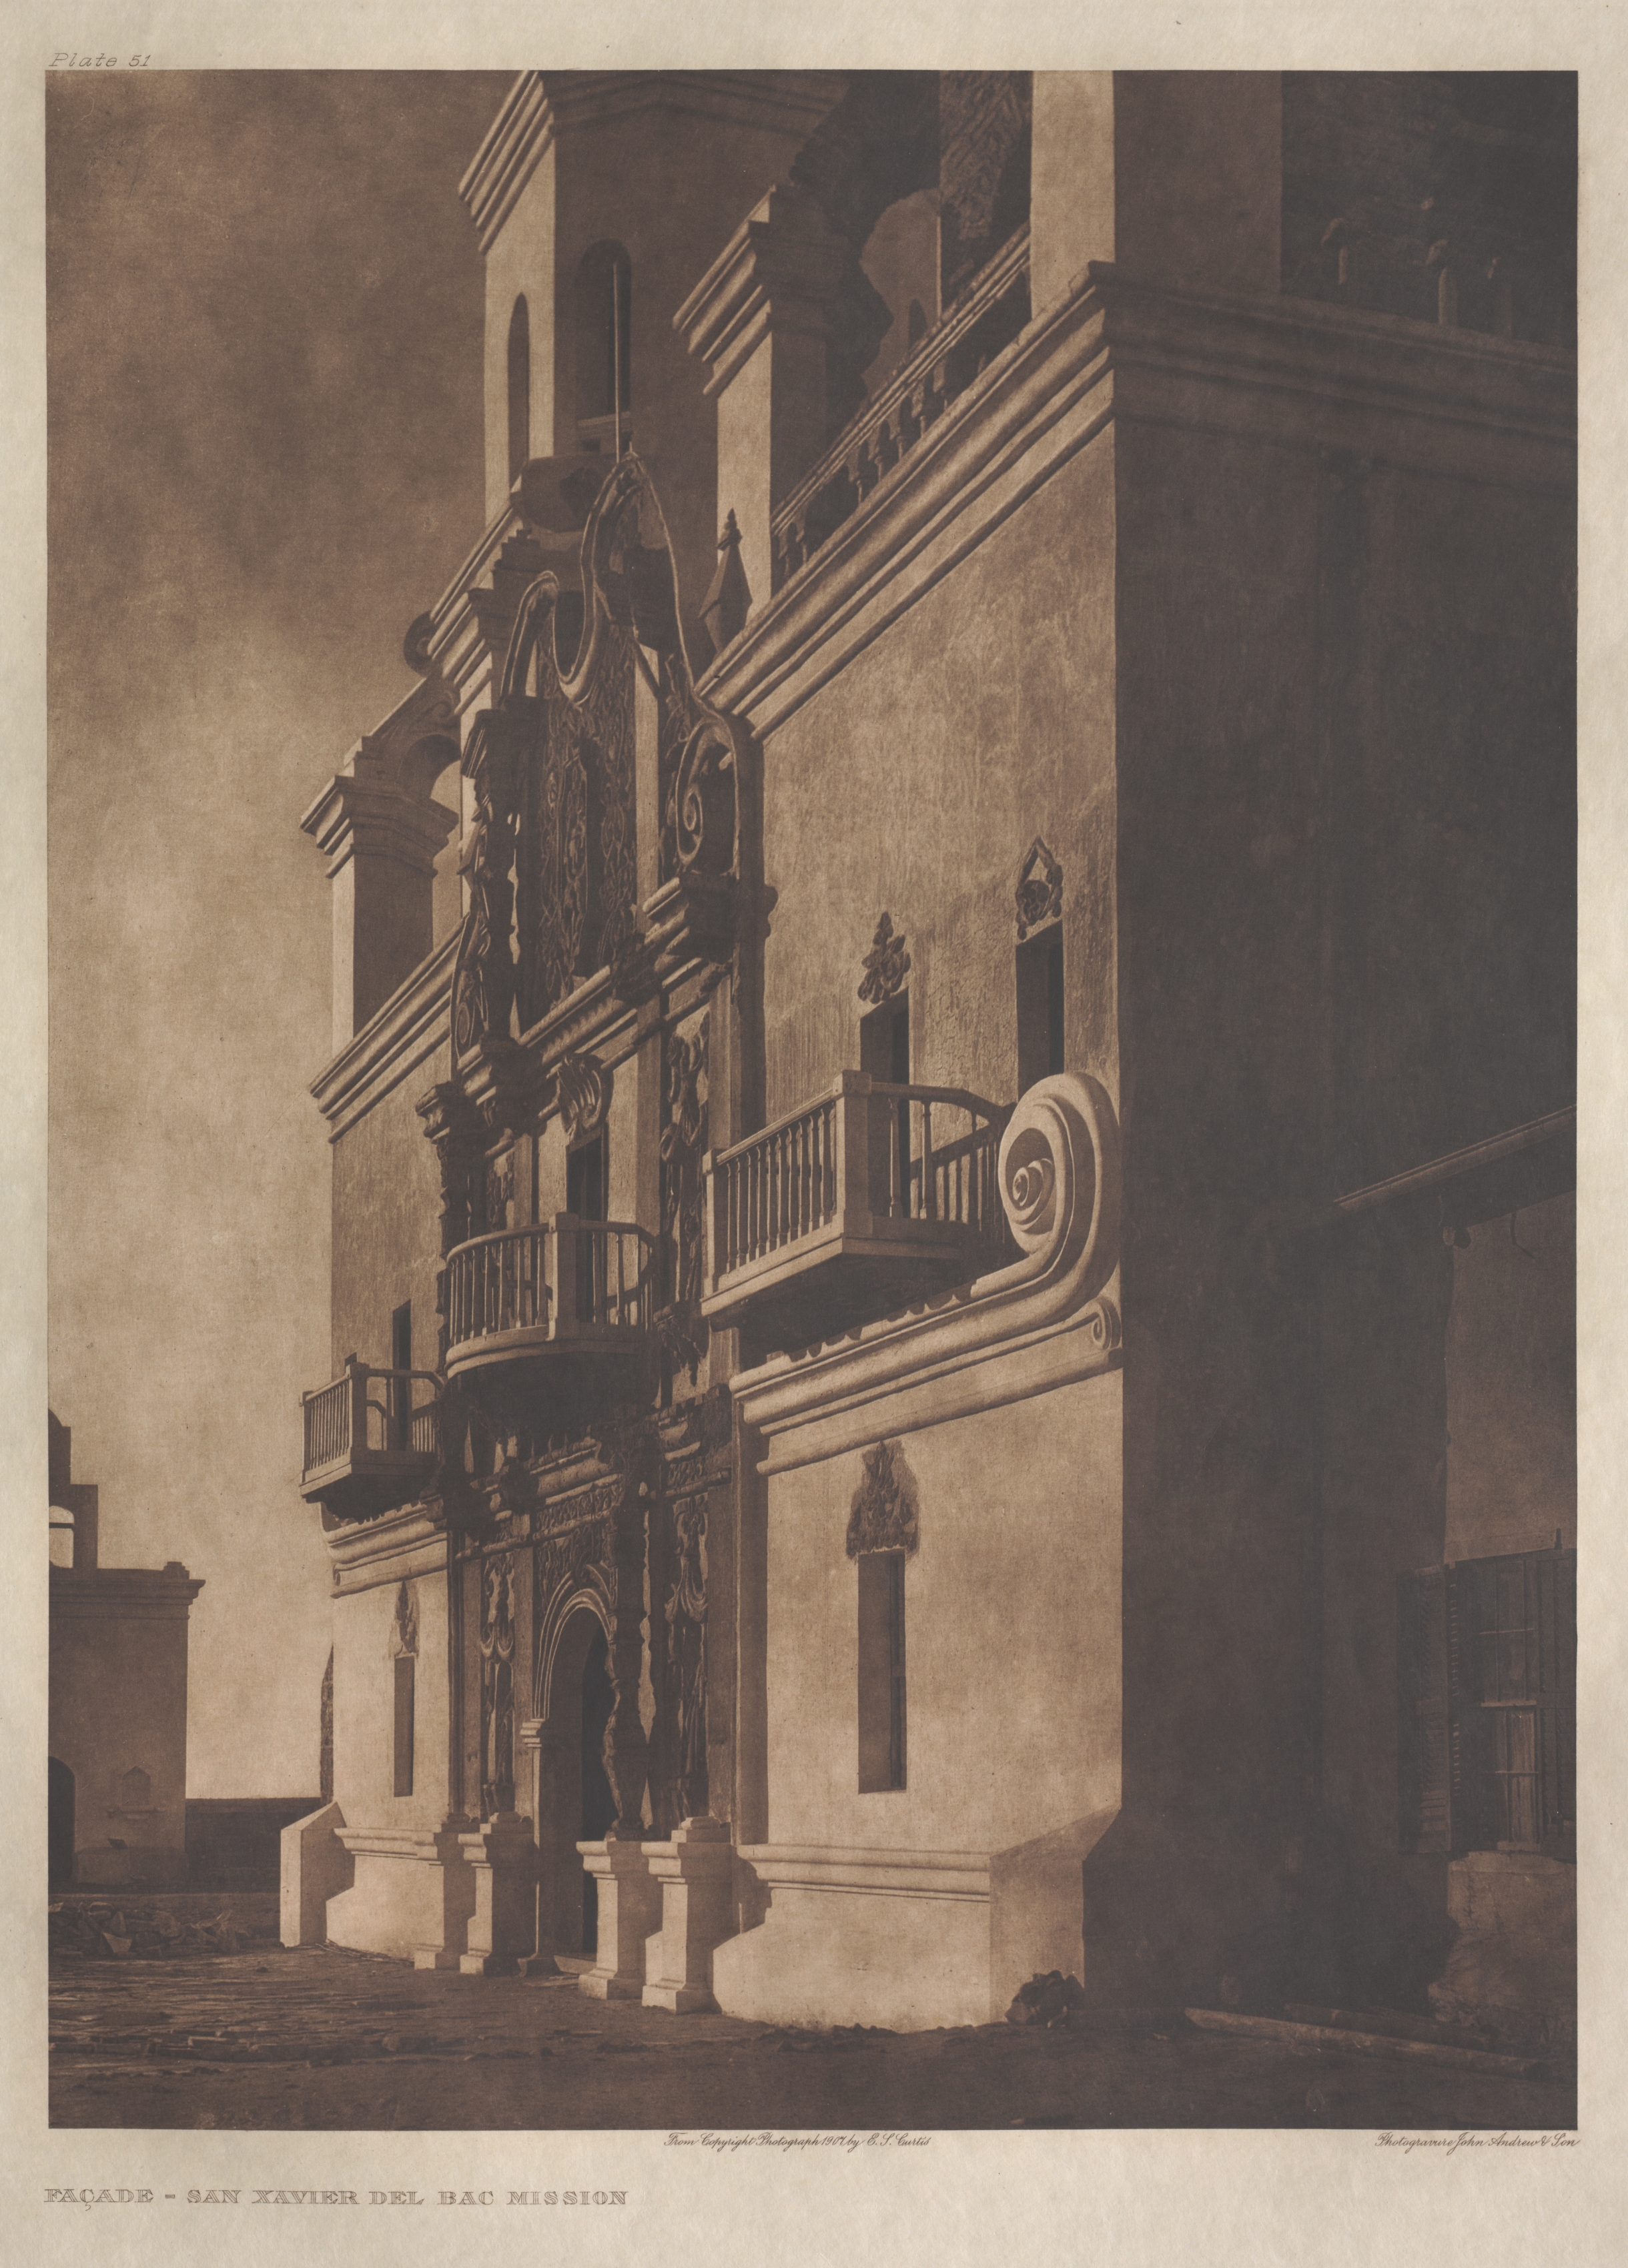 Portfolio II, Plate 51: Façade-San Xavier del Bac Mission